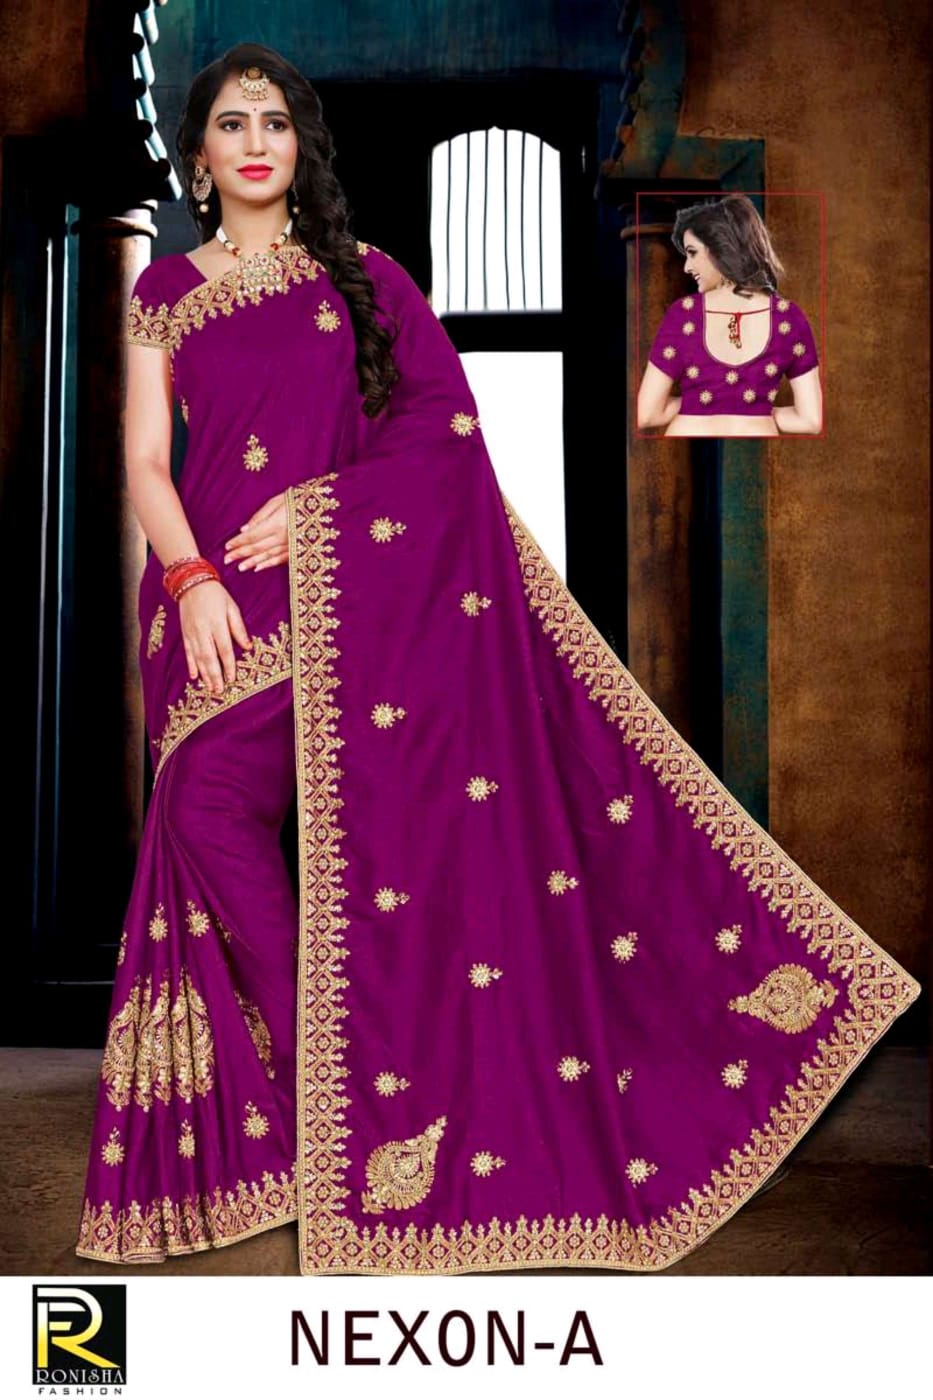 Ranjna Nexon Embroidery Jari Worked Heavy Diamond Wedding Saree Collecton